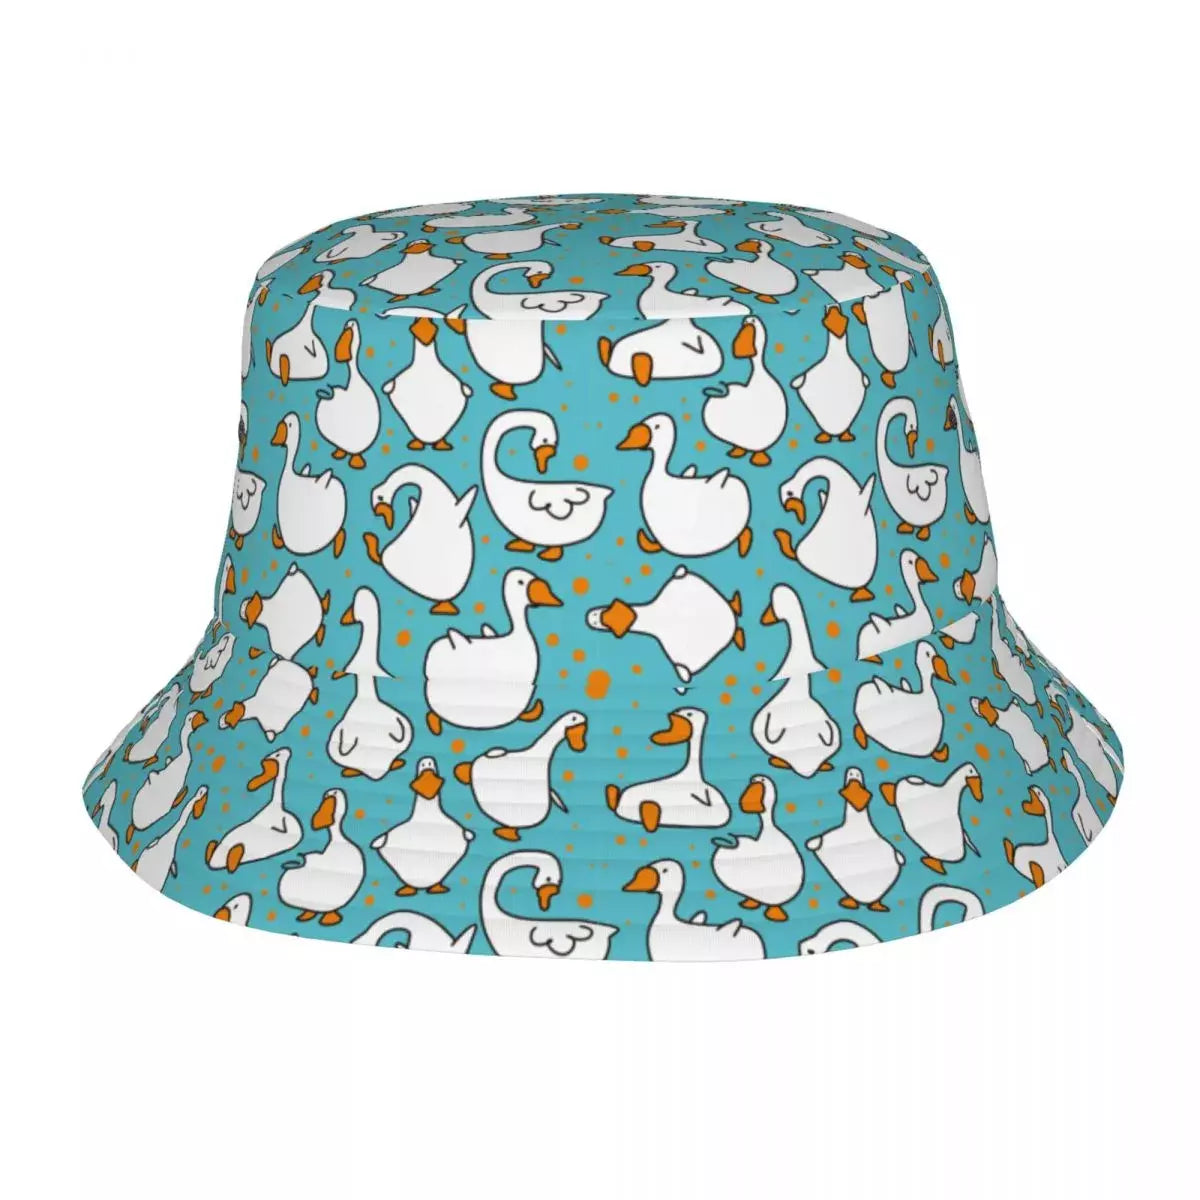 Goose Turquoise Bucket Hat